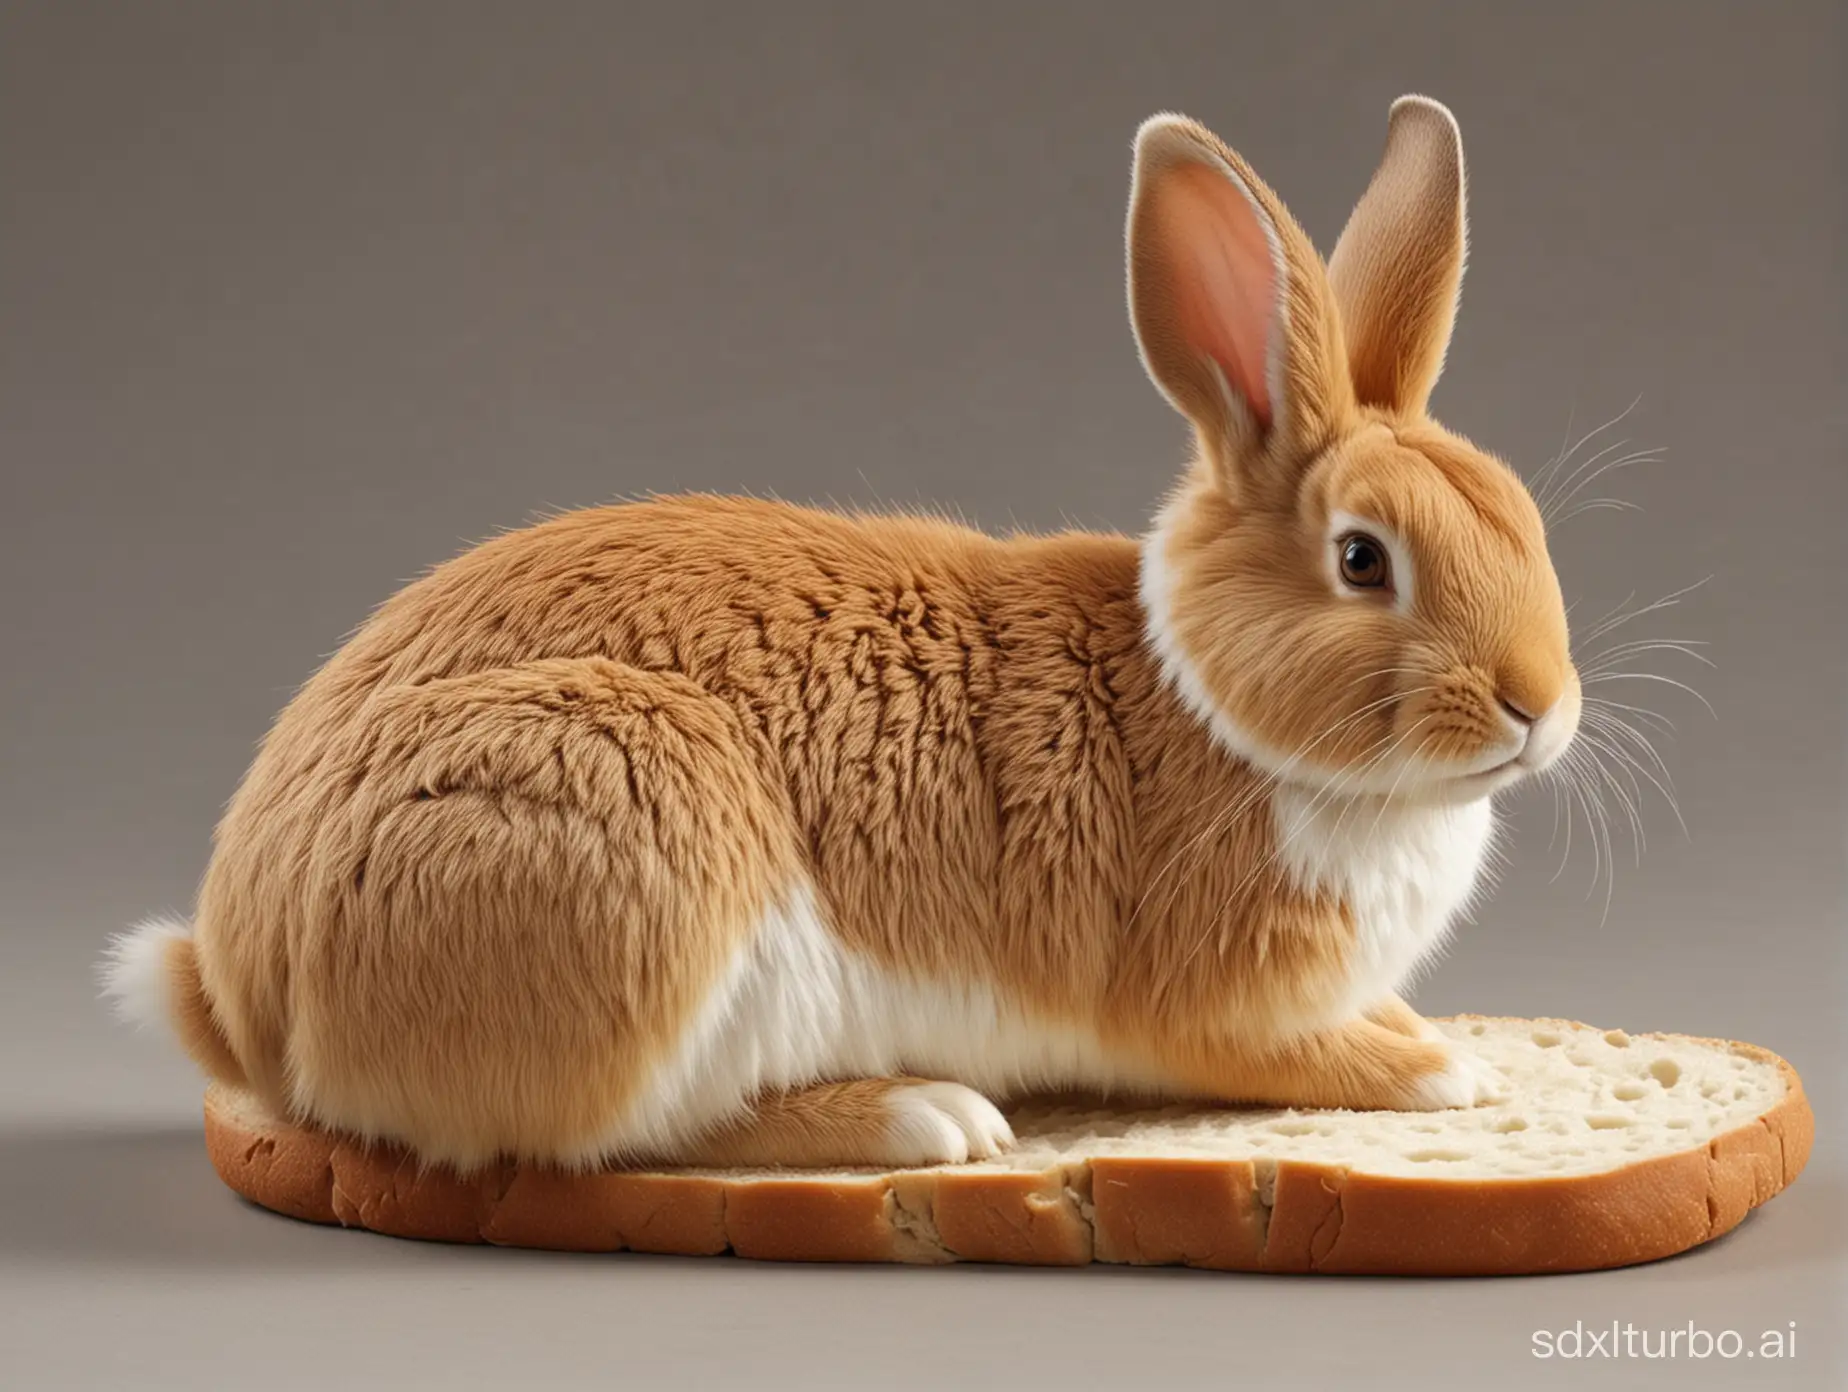 Adorable-Bread-Rabbit-Sculpture-Realistic-Artwork-Depicting-a-Cute-Rabbit-Made-of-Bread